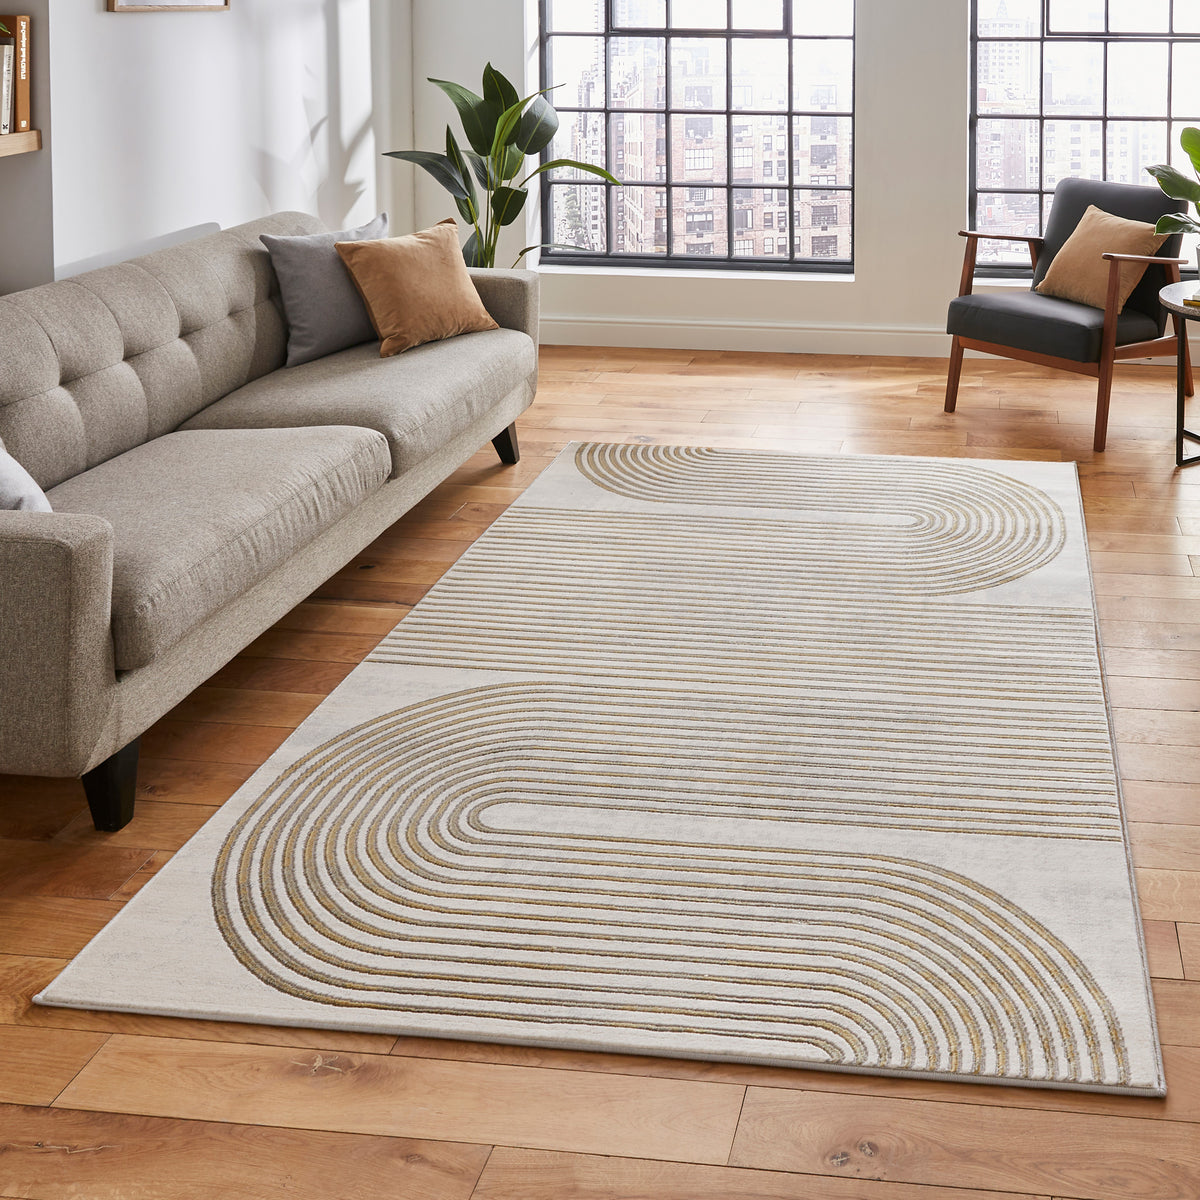 Aldrin Grey Gold Swirl Patterned Rug for living room